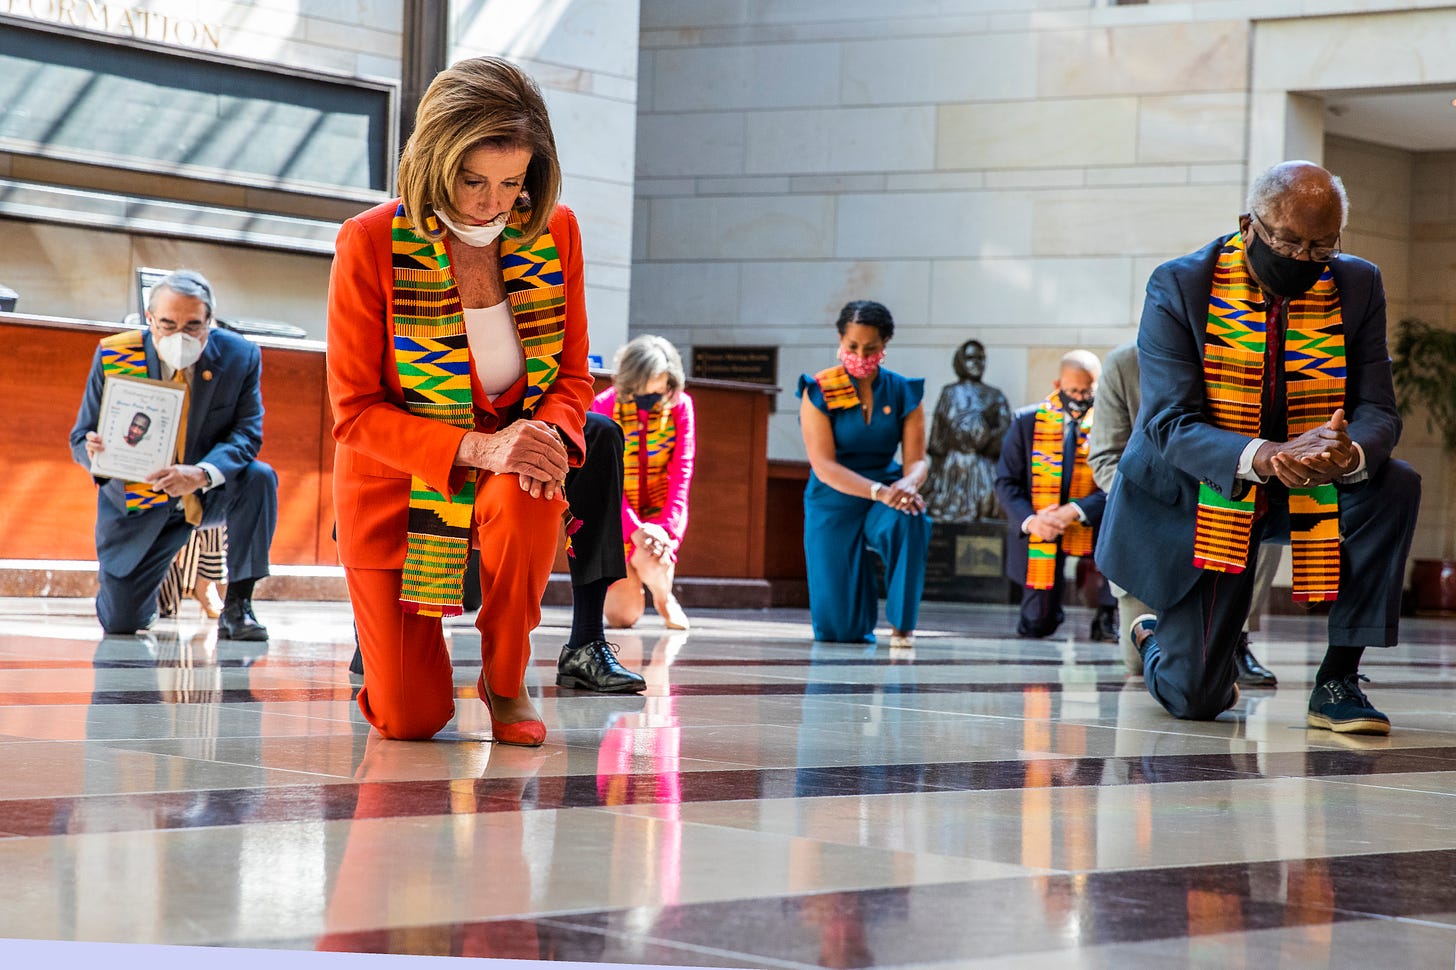 Kente cloth: Why Democrats honoring George Floyd wore kente stoles - The  Washington Post